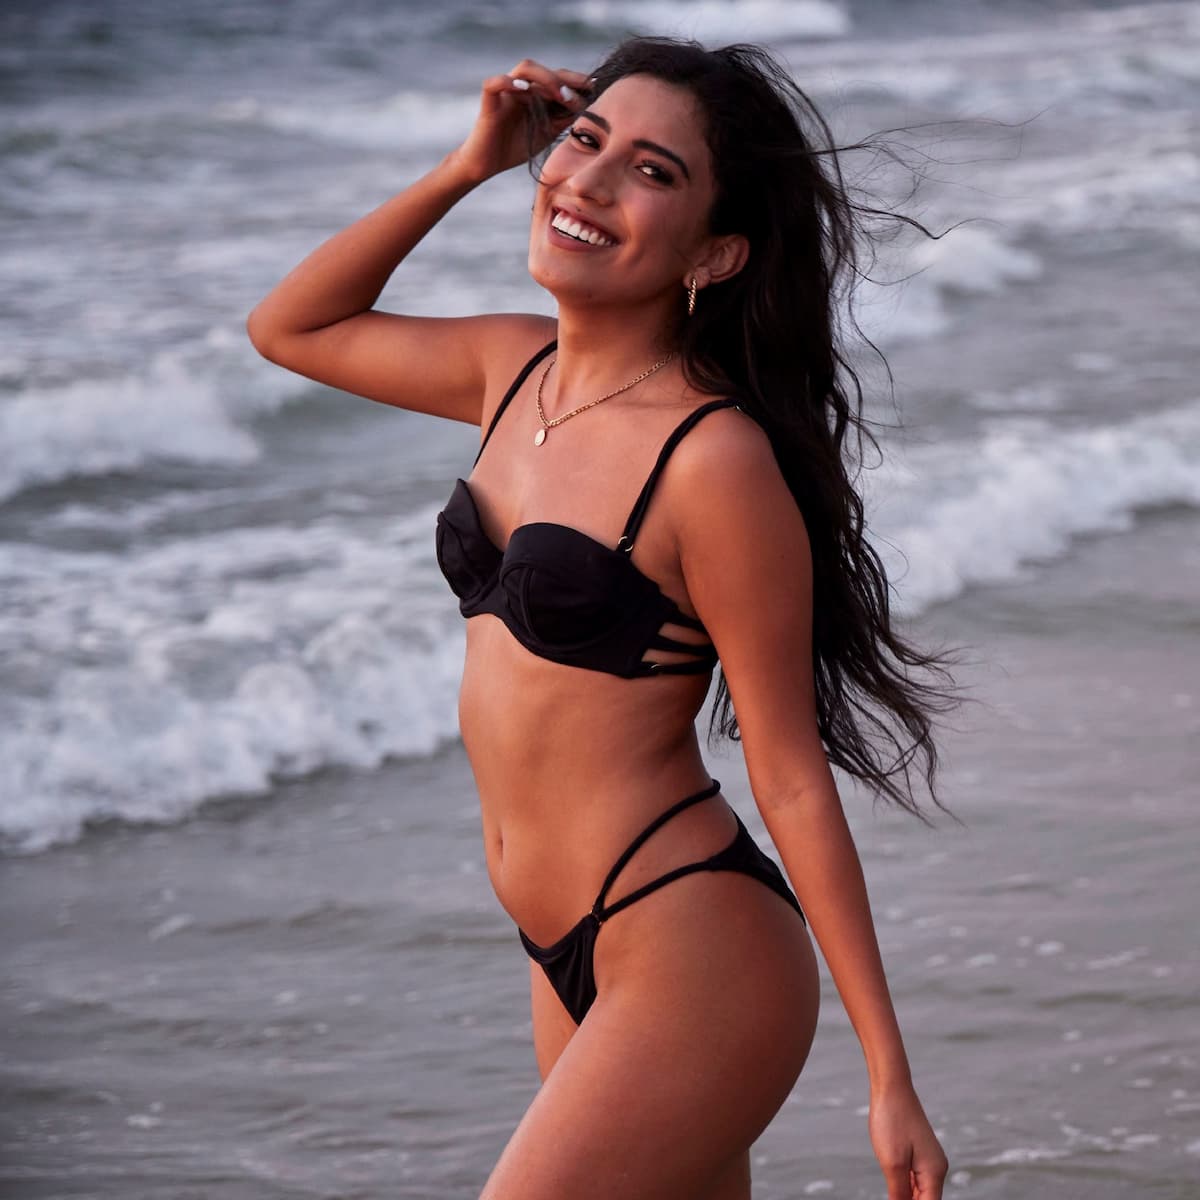 Valeria im Bikini als Bachelor-Kandidatin 2022